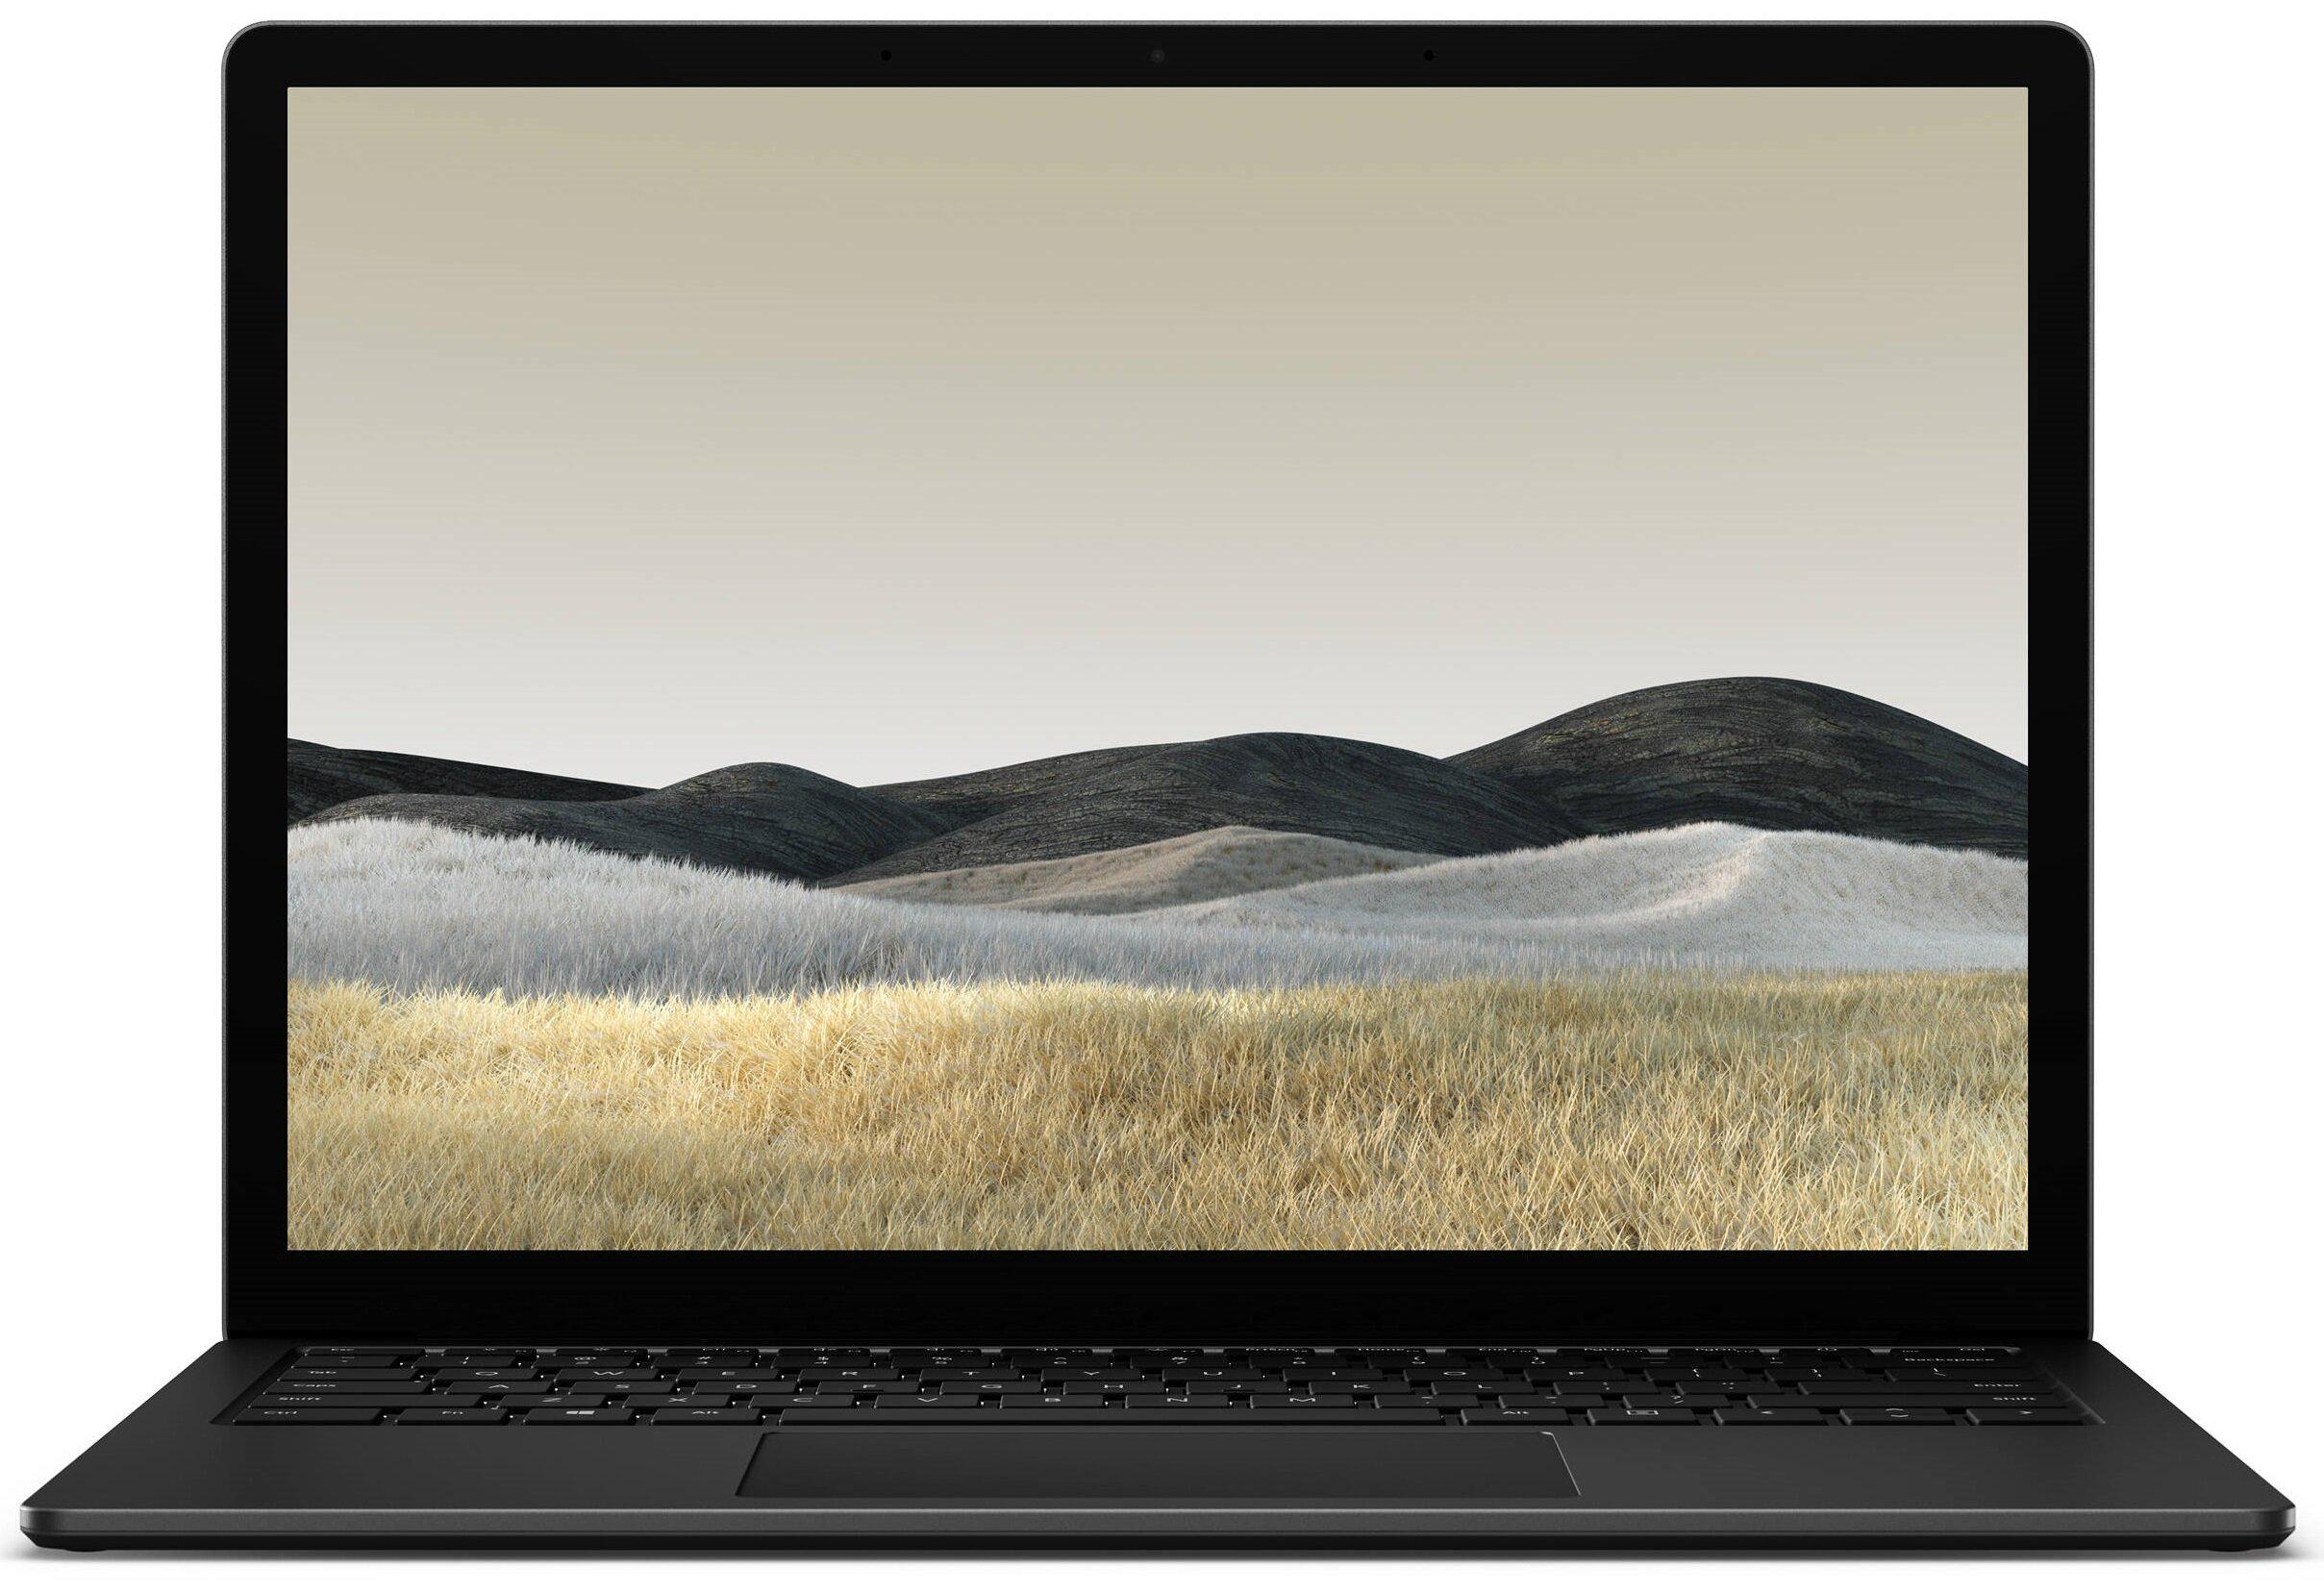 Ноутбук Microsoft Surface Laptop 3 135" i7-1065G7 RAM 1TB SSD Windows 10 Professional 16 Gb (PLJ-00008)